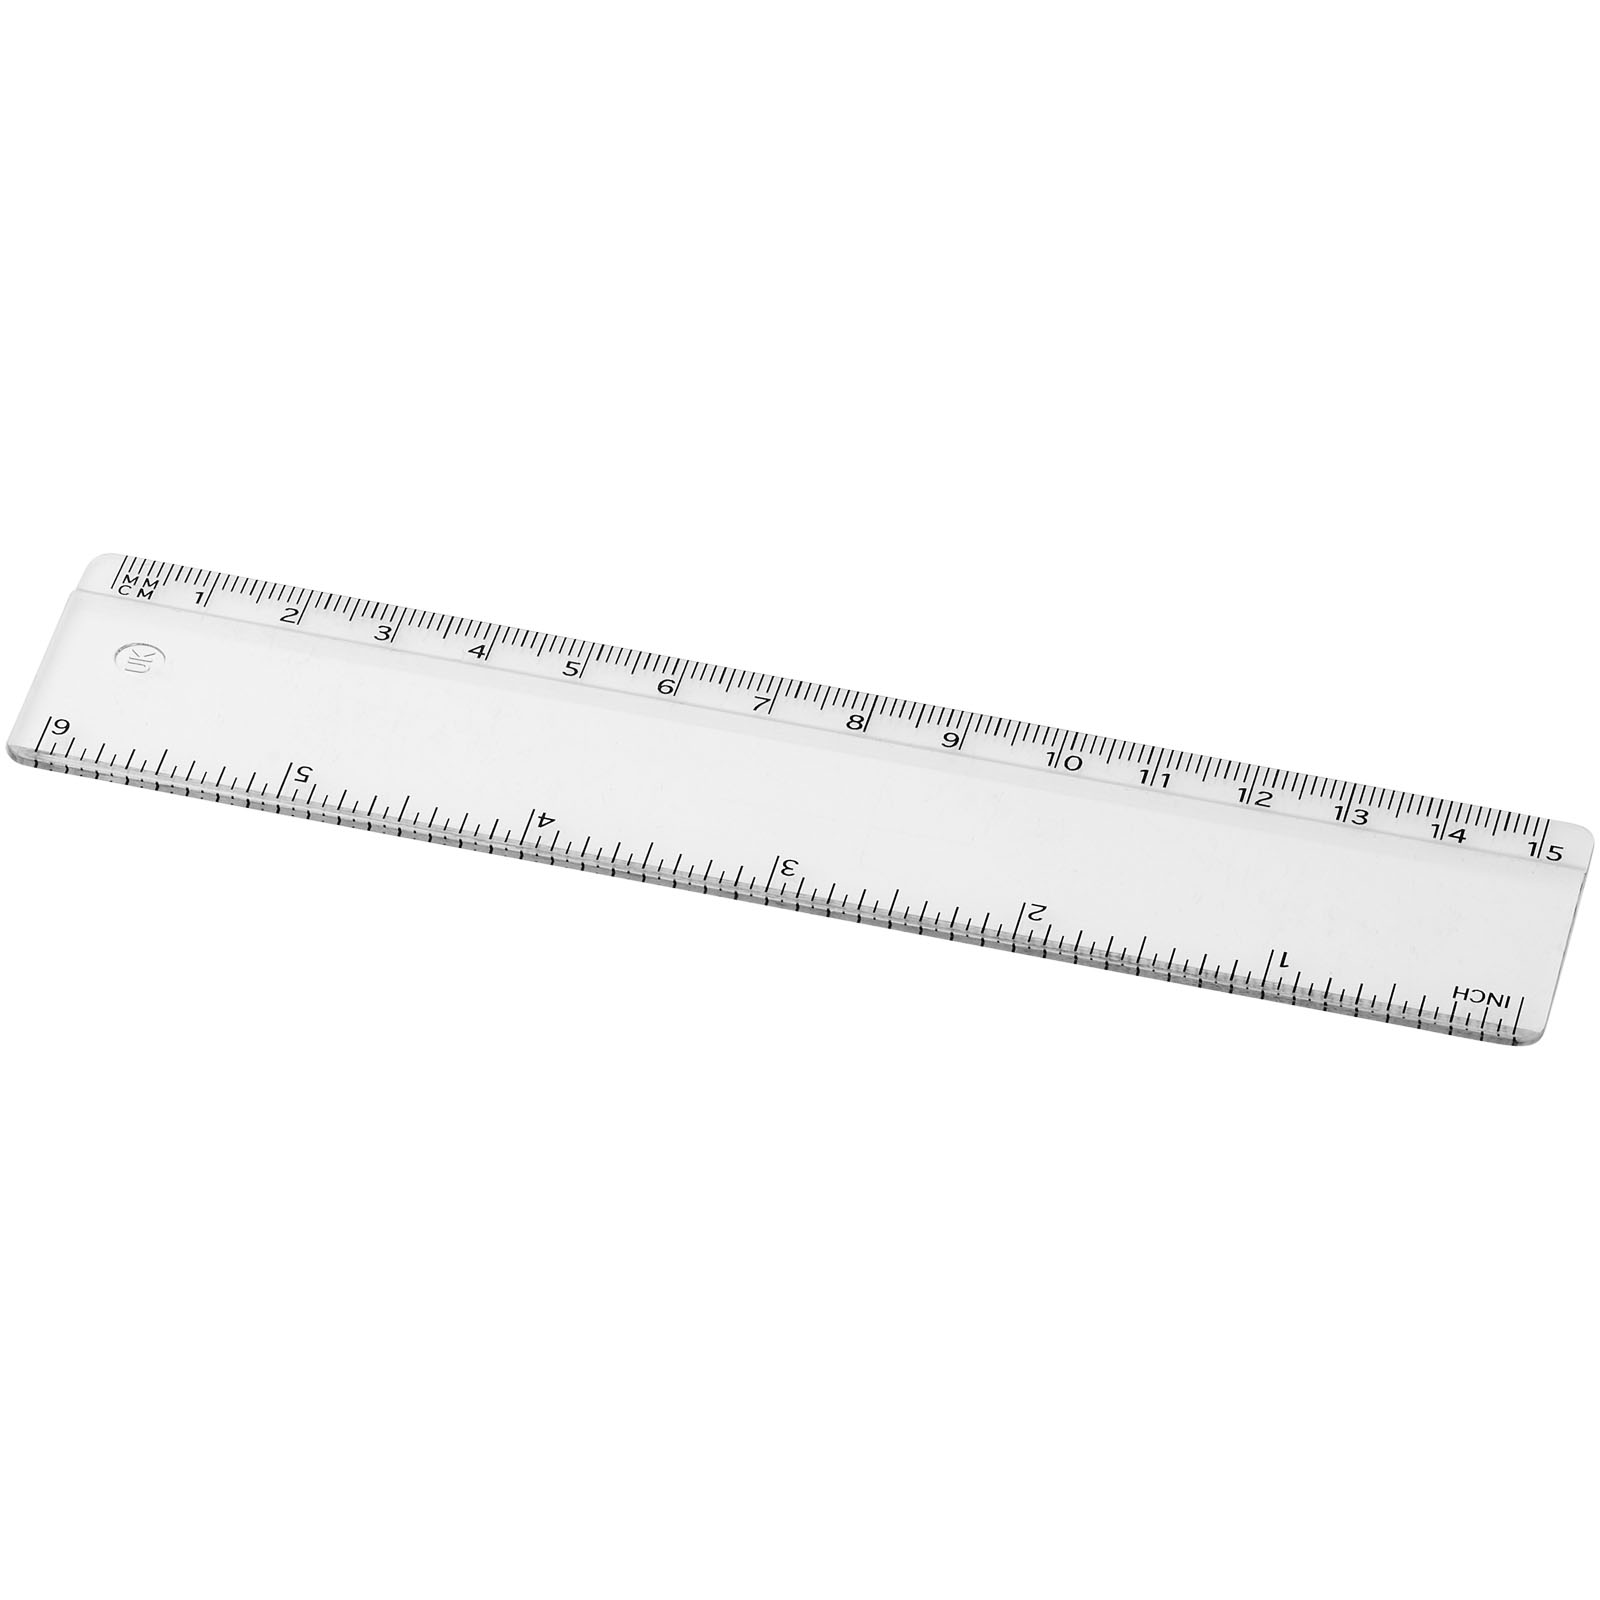 Advertising Desk Accessories - Renzo 15 cm plastic ruler - 0